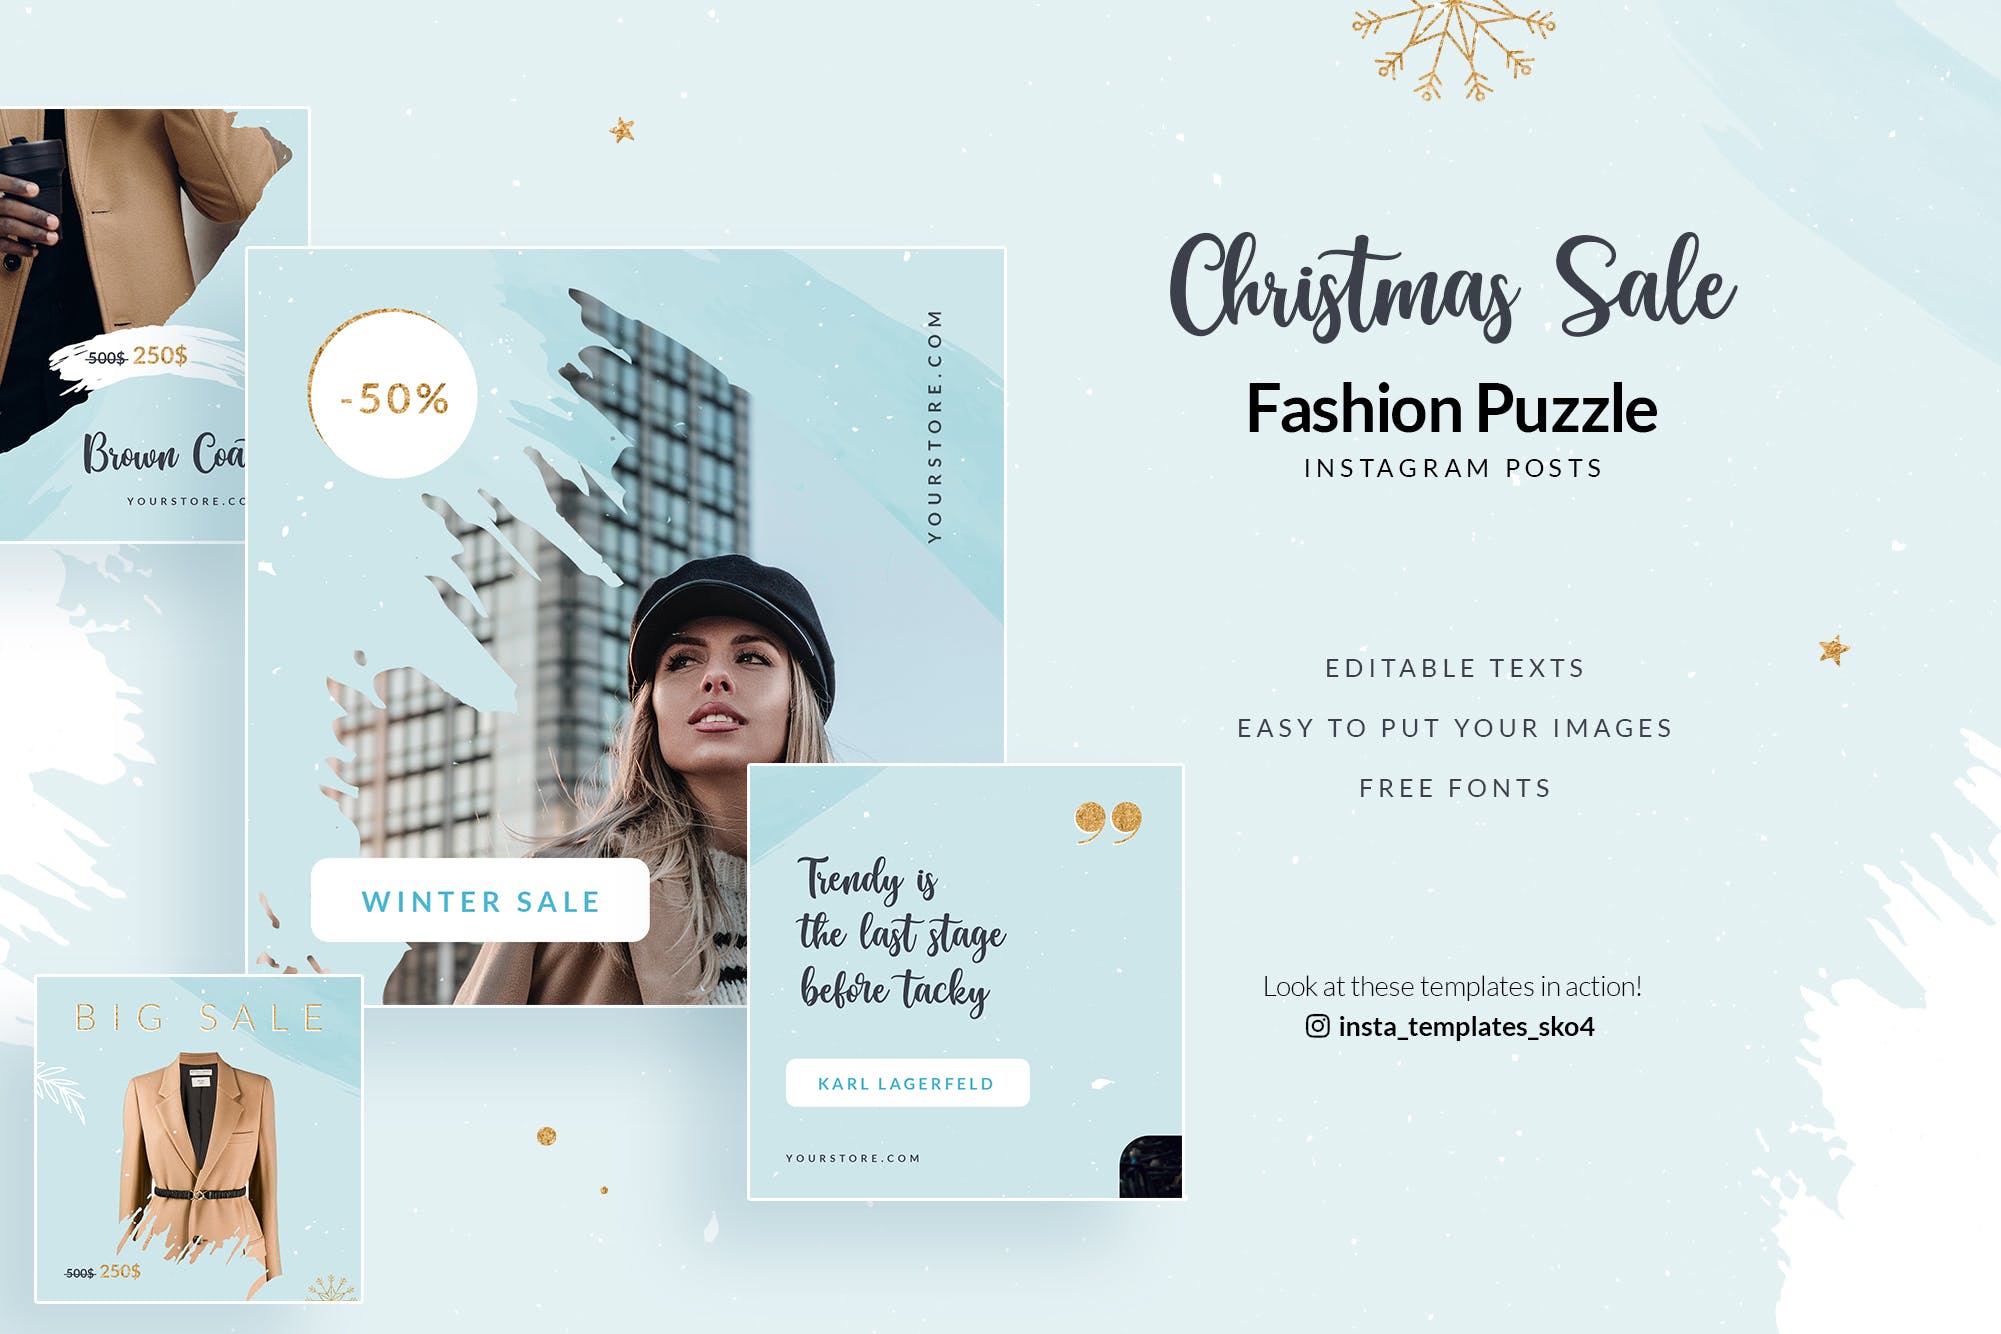 圣诞节时尚促销广告Instagram拼图风格设计模板非凡图库精选 Christmas Fashion Sale – Instagram Puzzle插图(2)